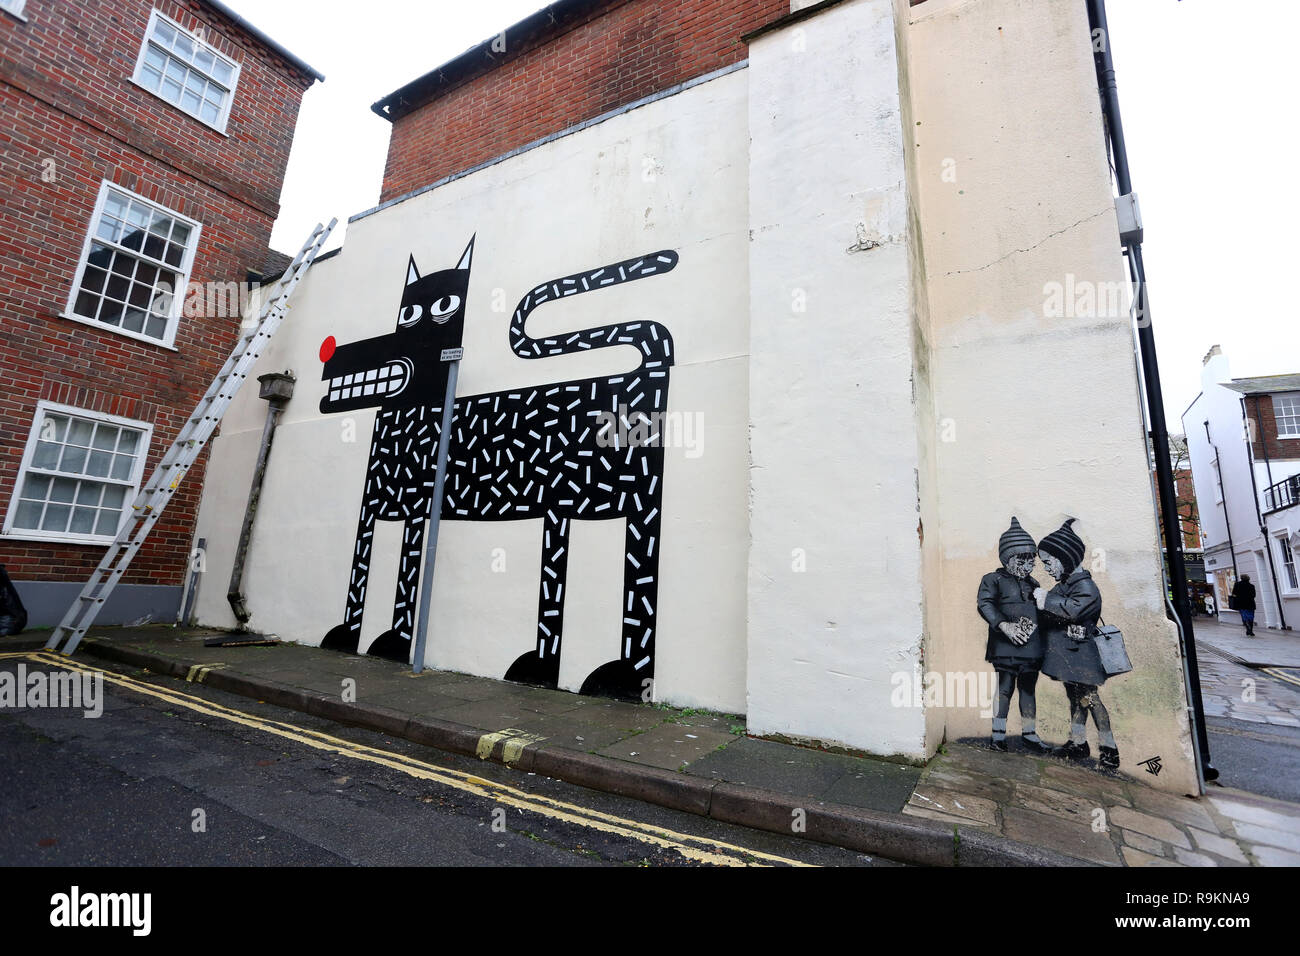 Graffiti art by artist Joachim, (Rosh Boroumand a Belgian street artist) in Chichester, West Sussex, UK. Stock Photo